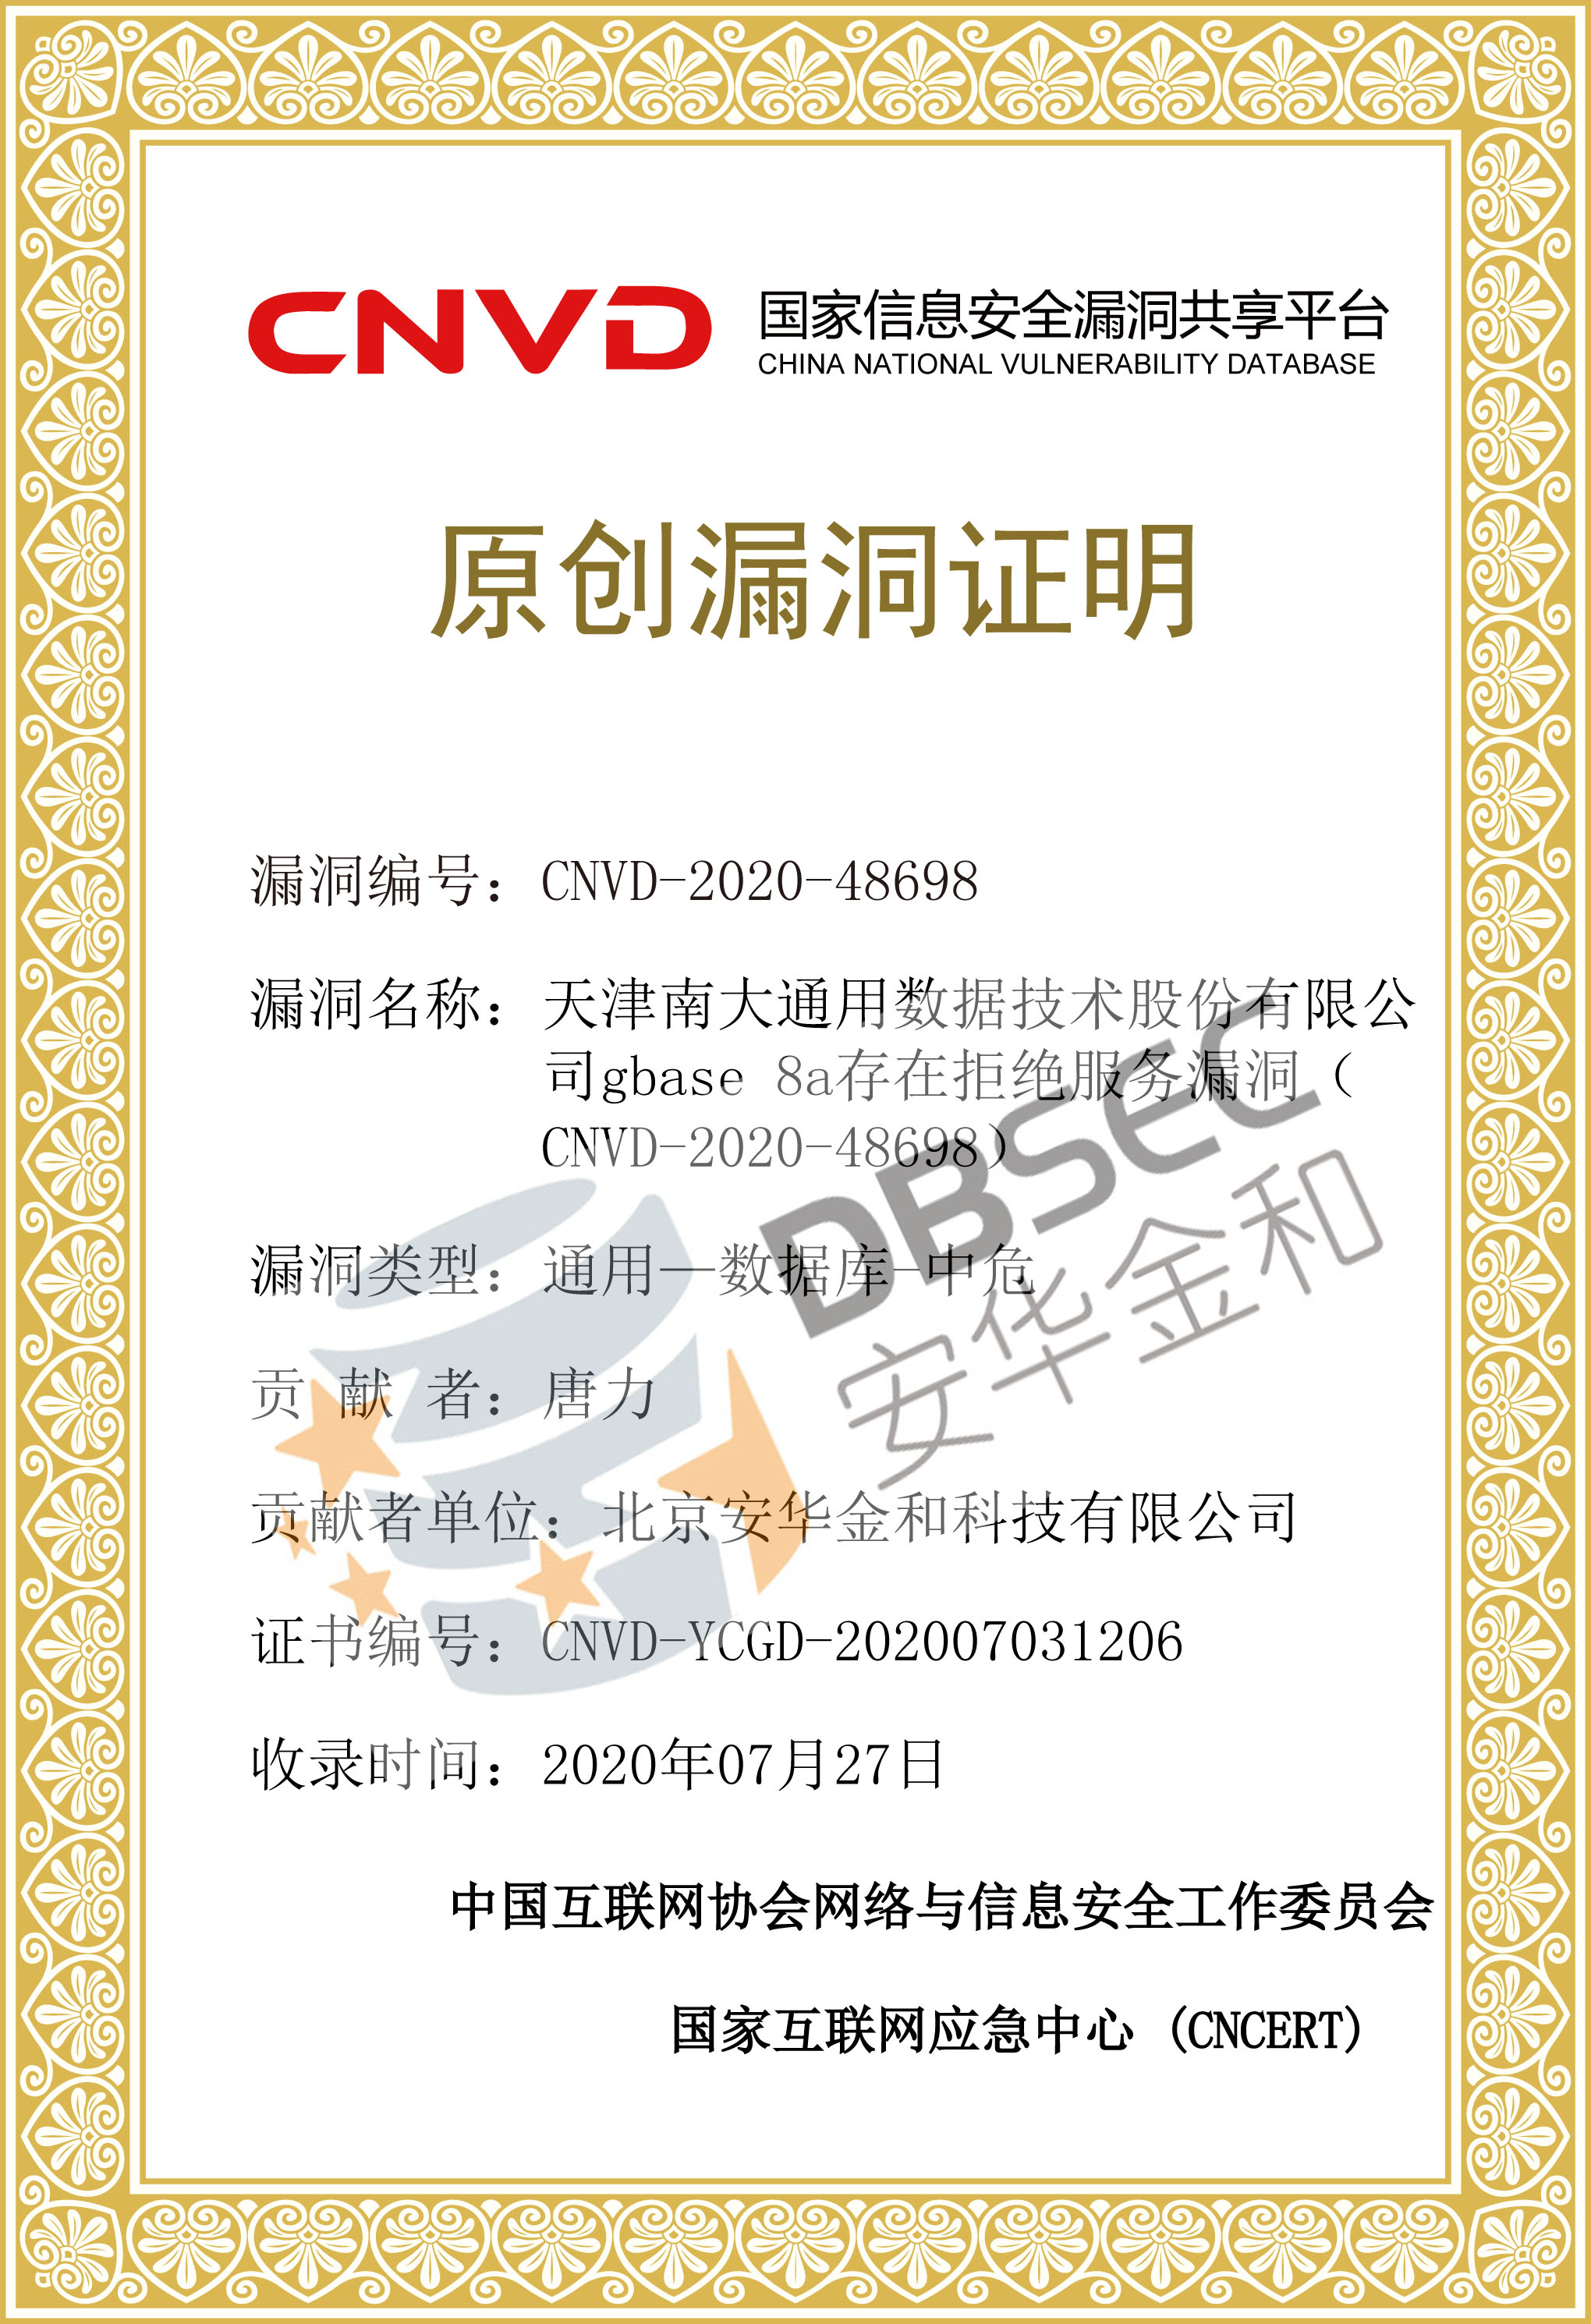 CNVD-YCGD-202007031206